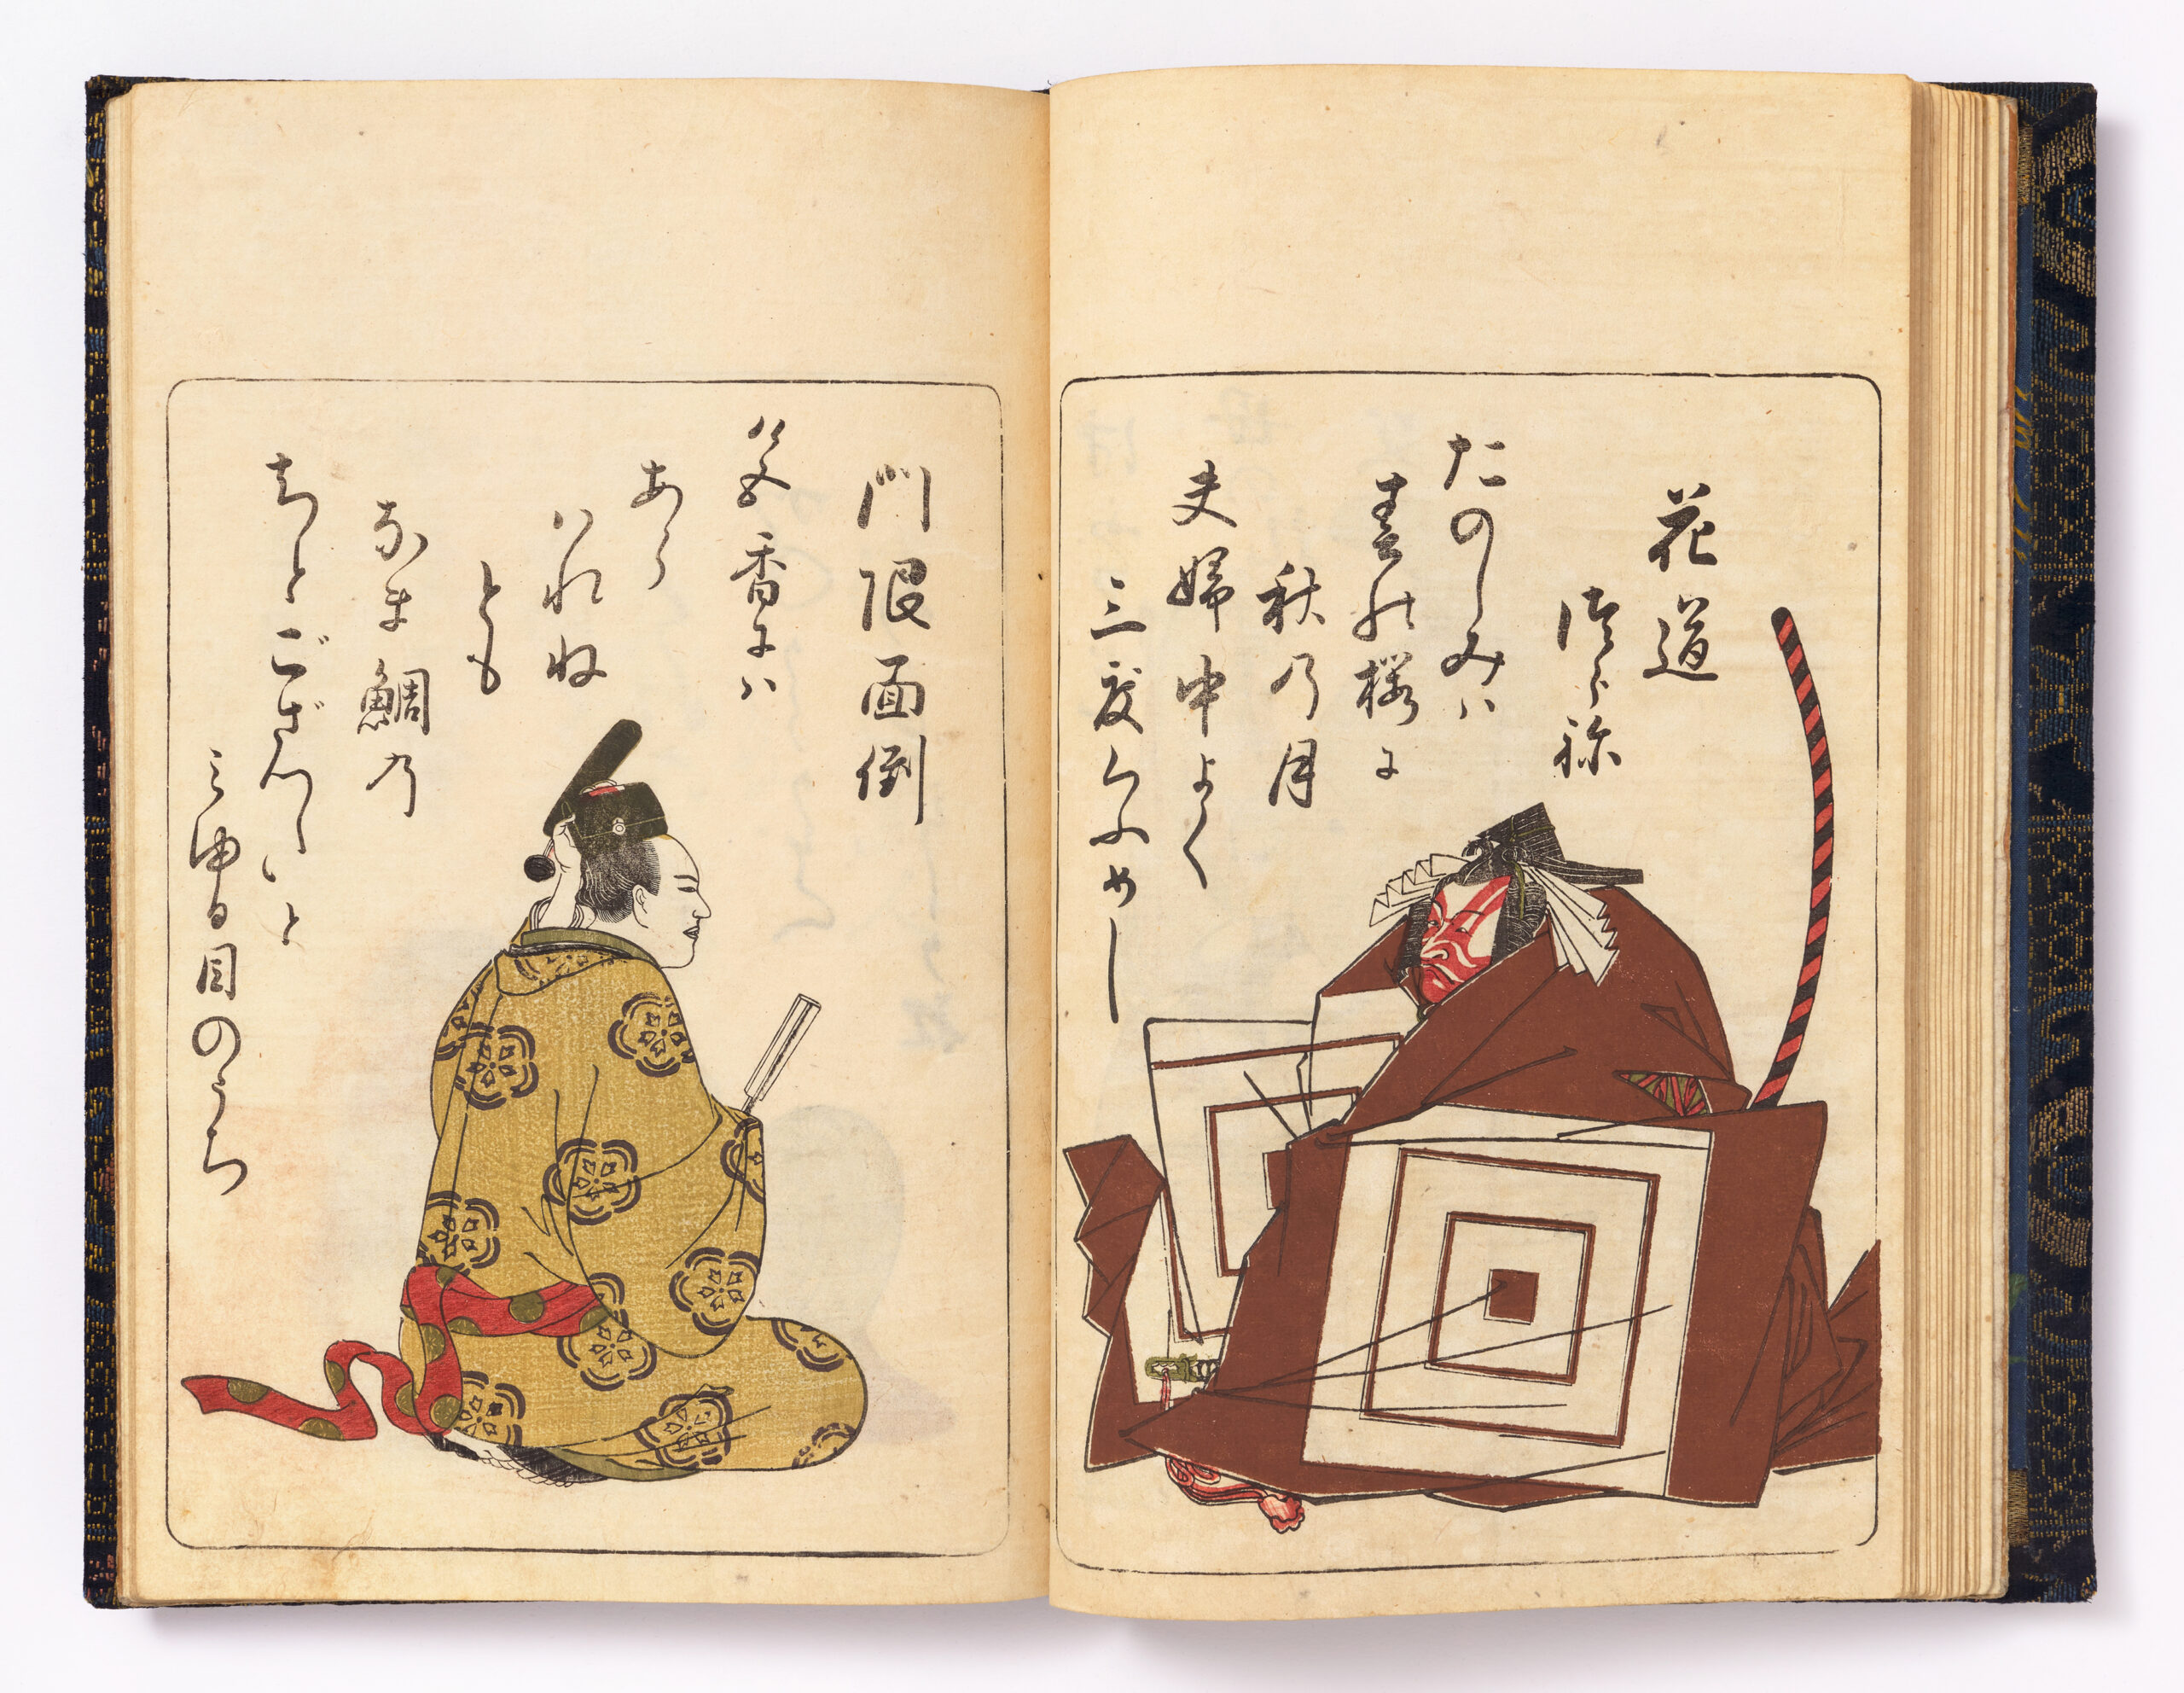 Kitao Masanobu (Santo Kyoden) (1761-1816), "Anthology of 'Crazy Verses' (Kyoka) by Fifty Poets of the Tenmei Era" ([Tenmei shinsen gojunin isshu] Asumaburi kyoka bunko), woodblock-printed illustrated book, dated: 1786 (Tenmei 6), one volume, complete